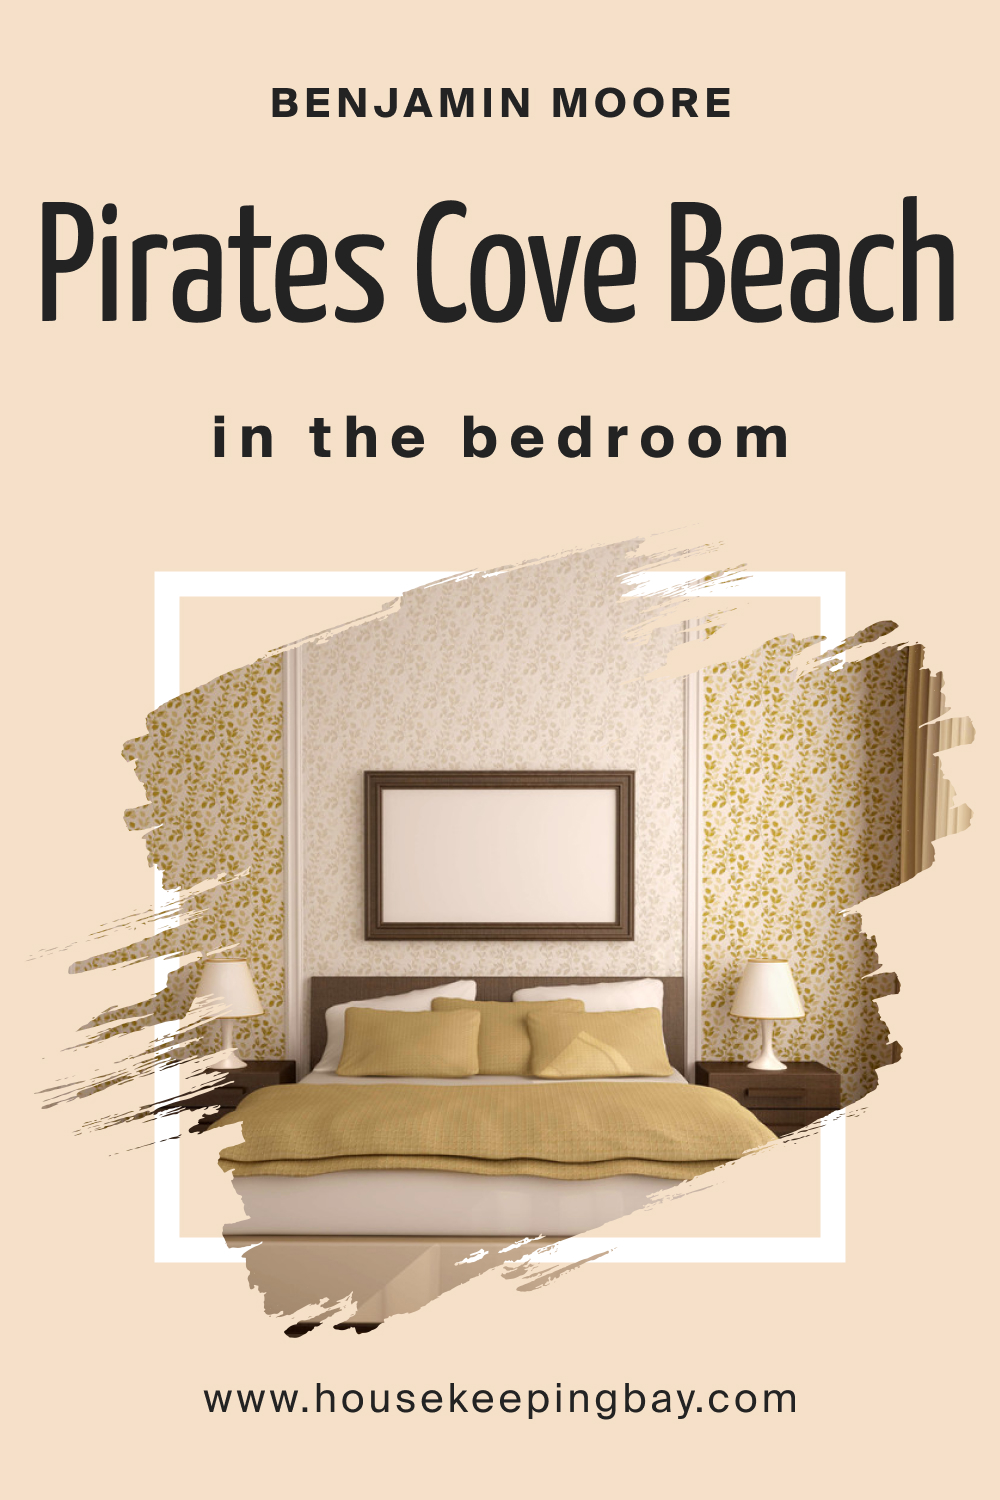 Benjamin Moore. Pirates Cove Beach OC 80 for the Bedroom